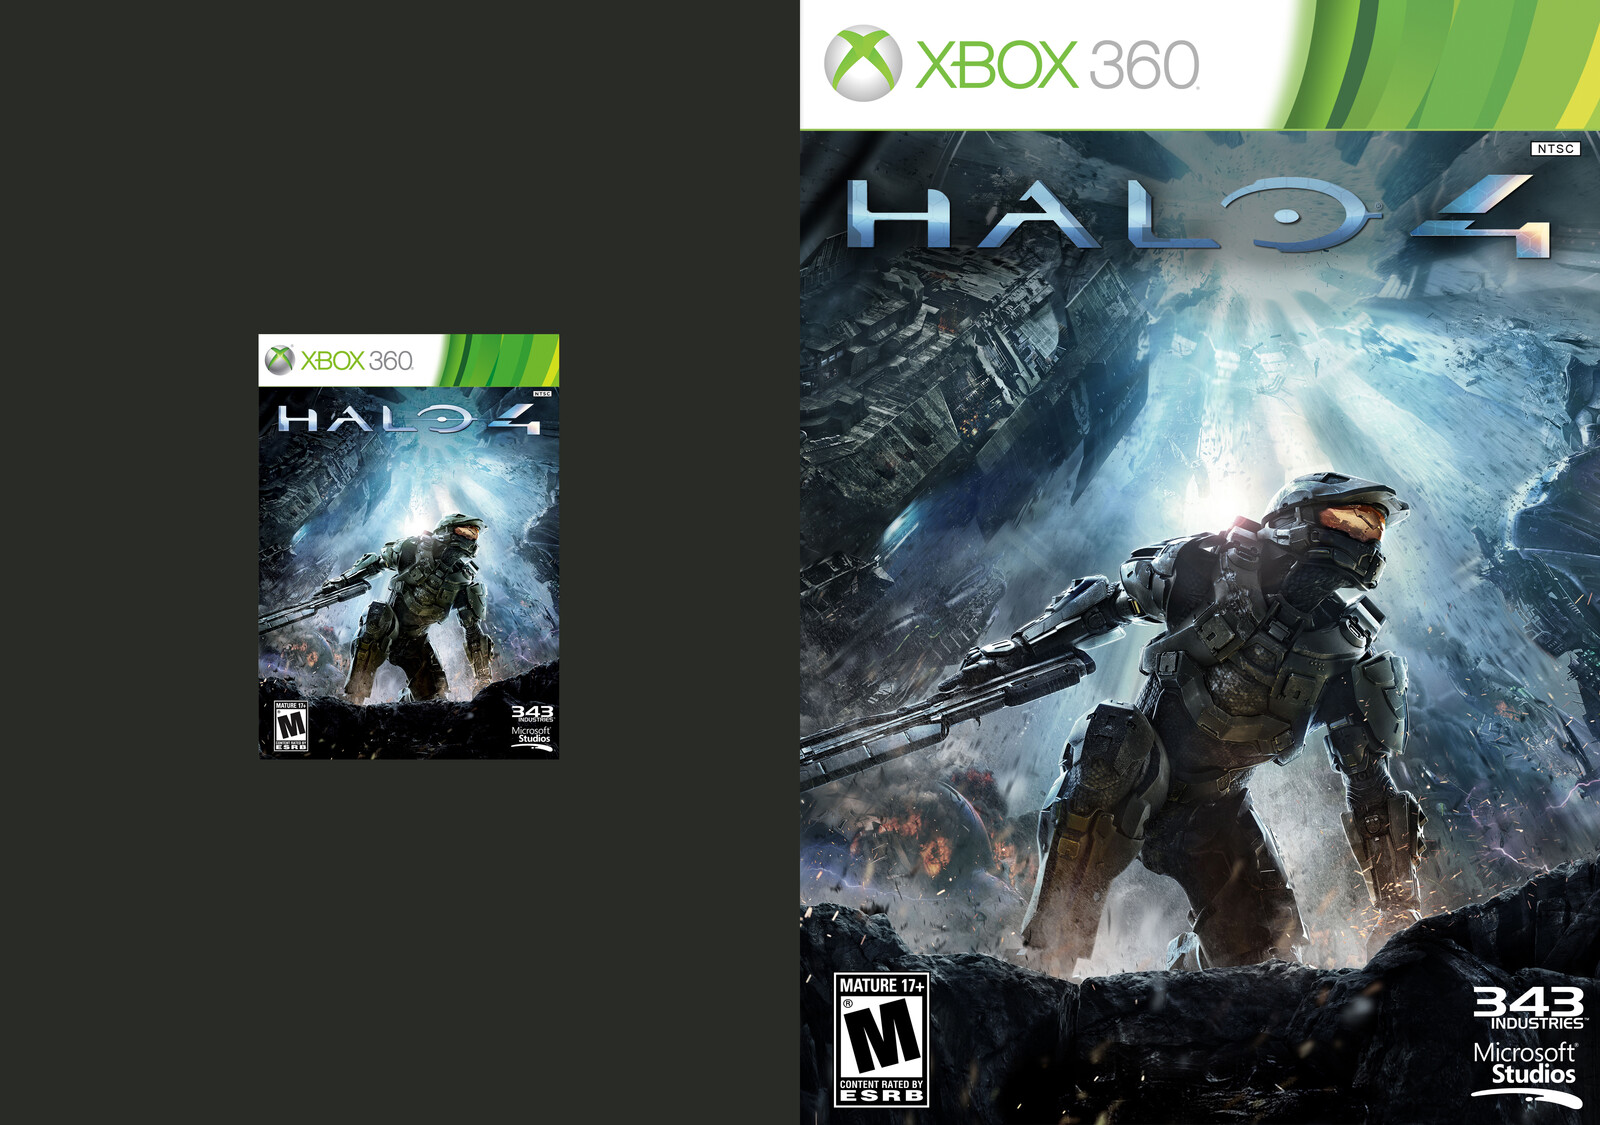 Halo 4 (original scan cover vs. upscaled)